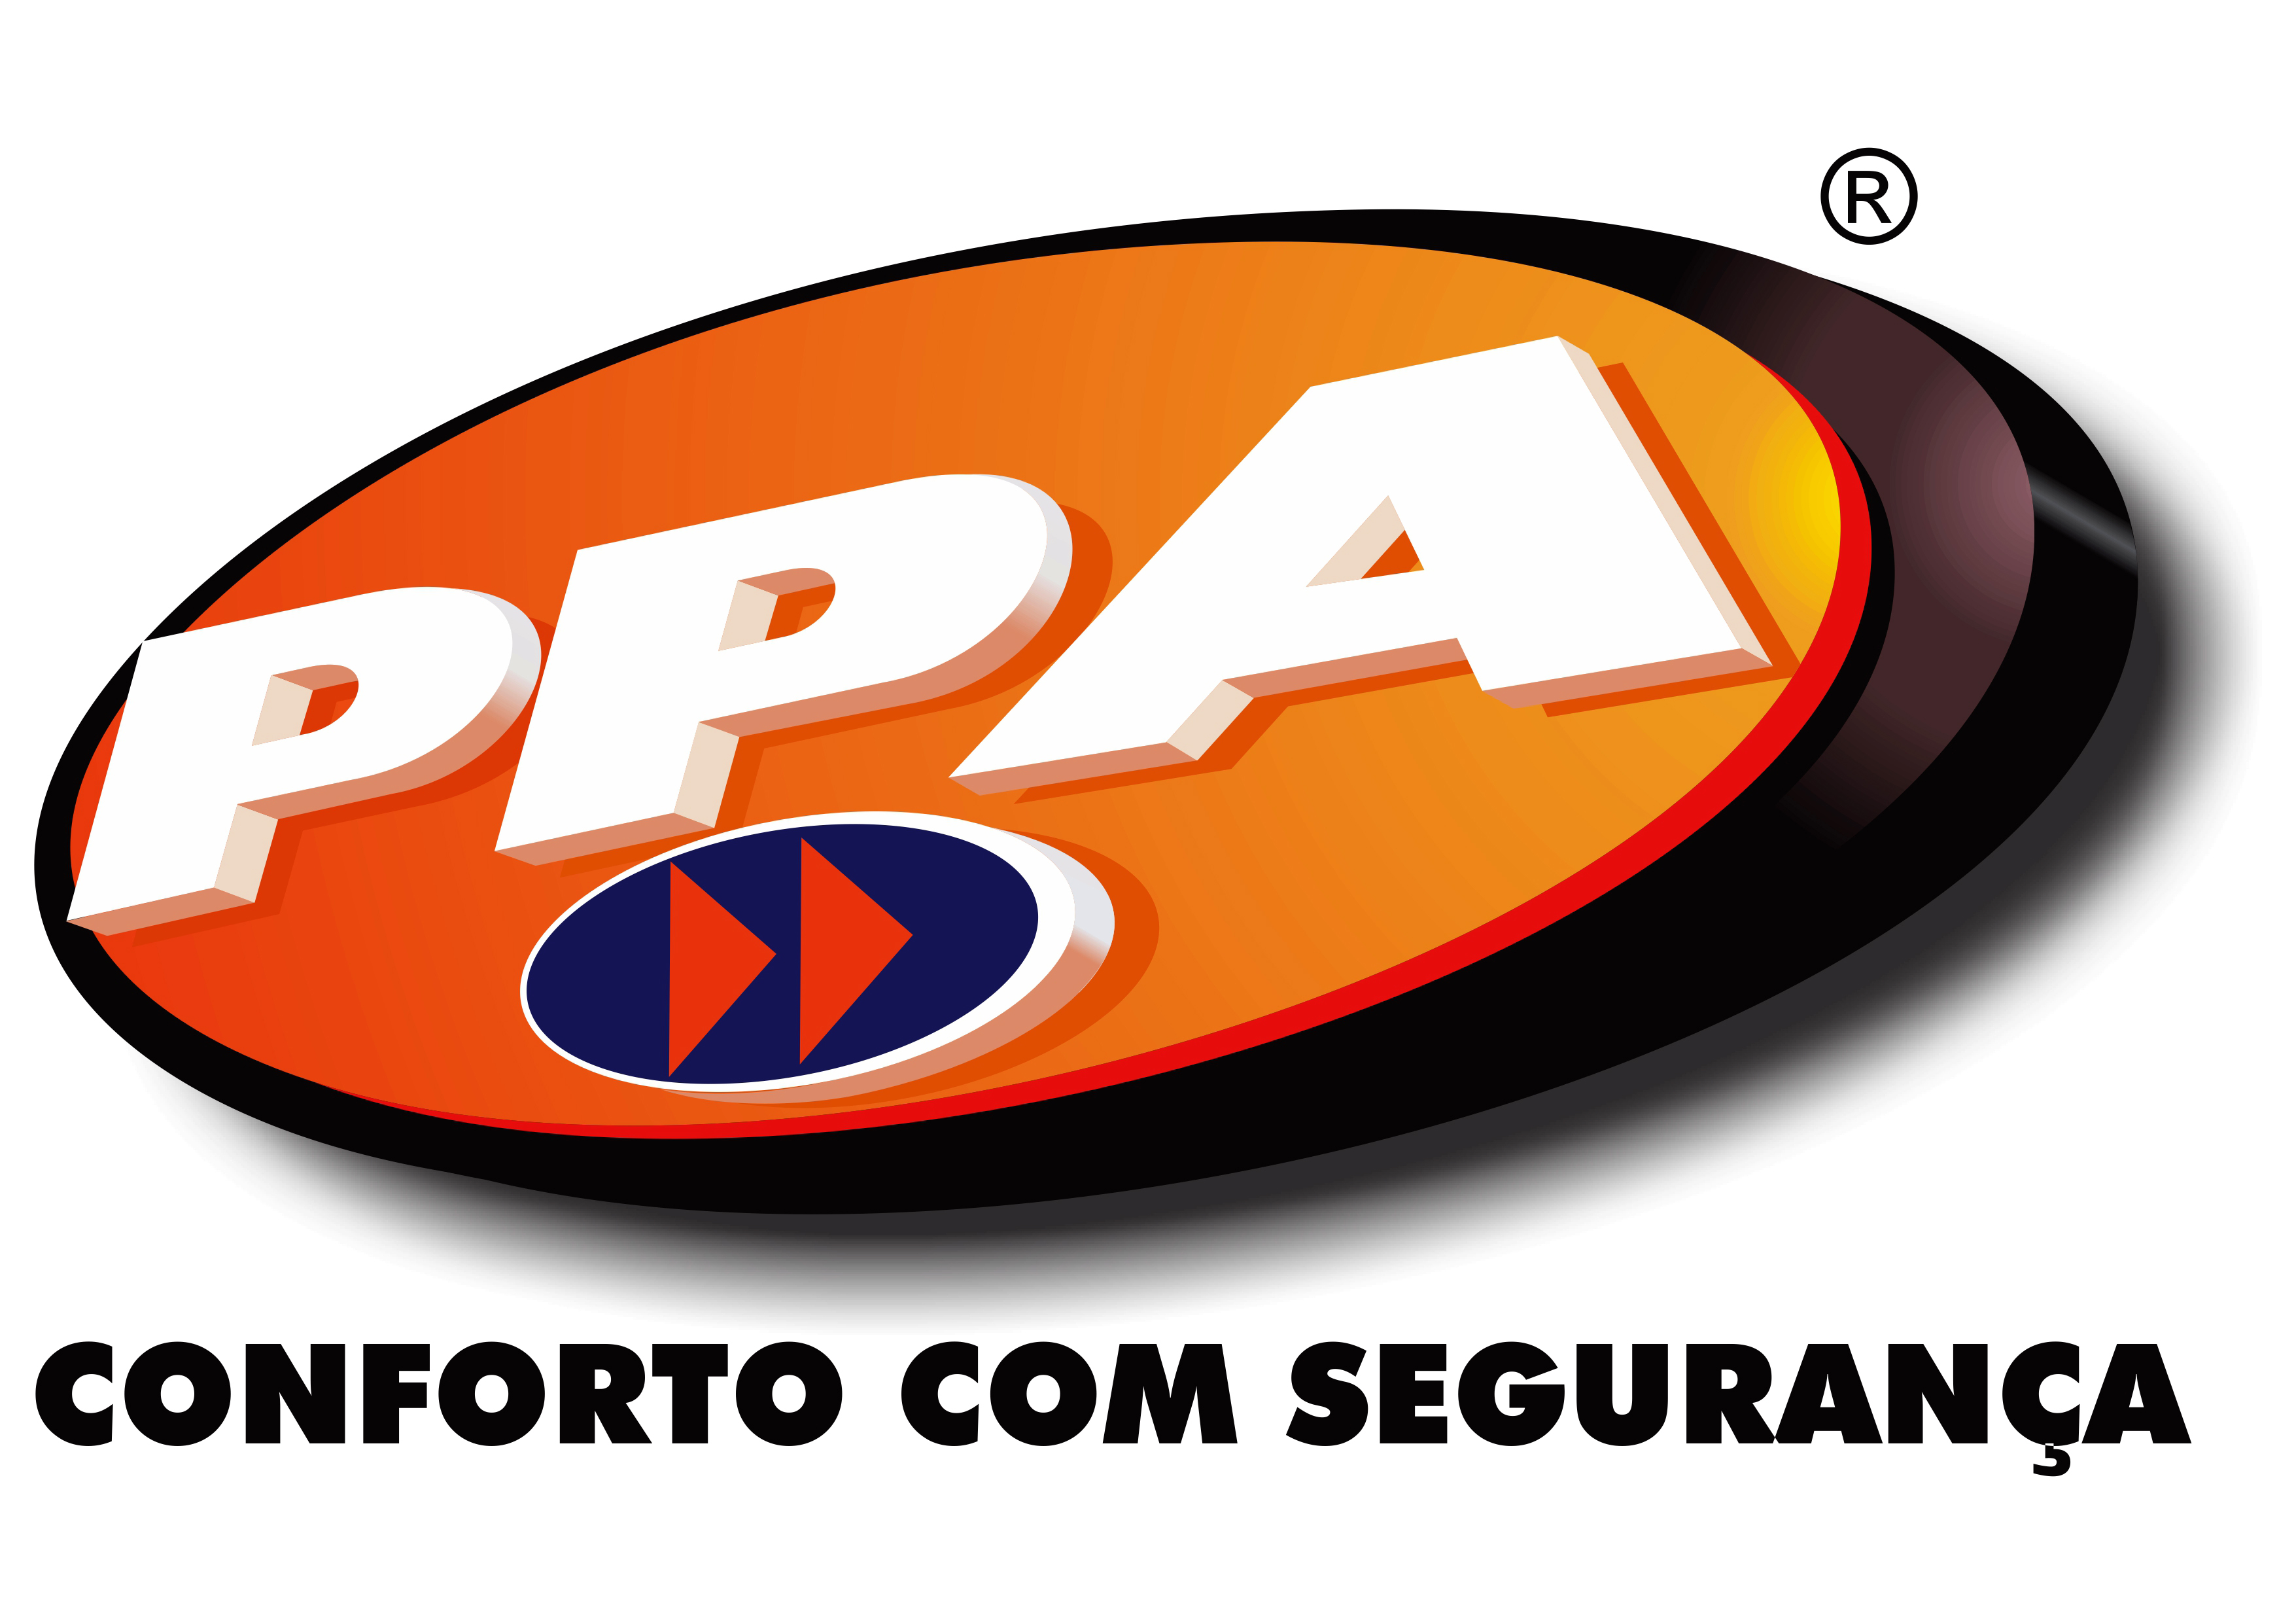 Logo PPA